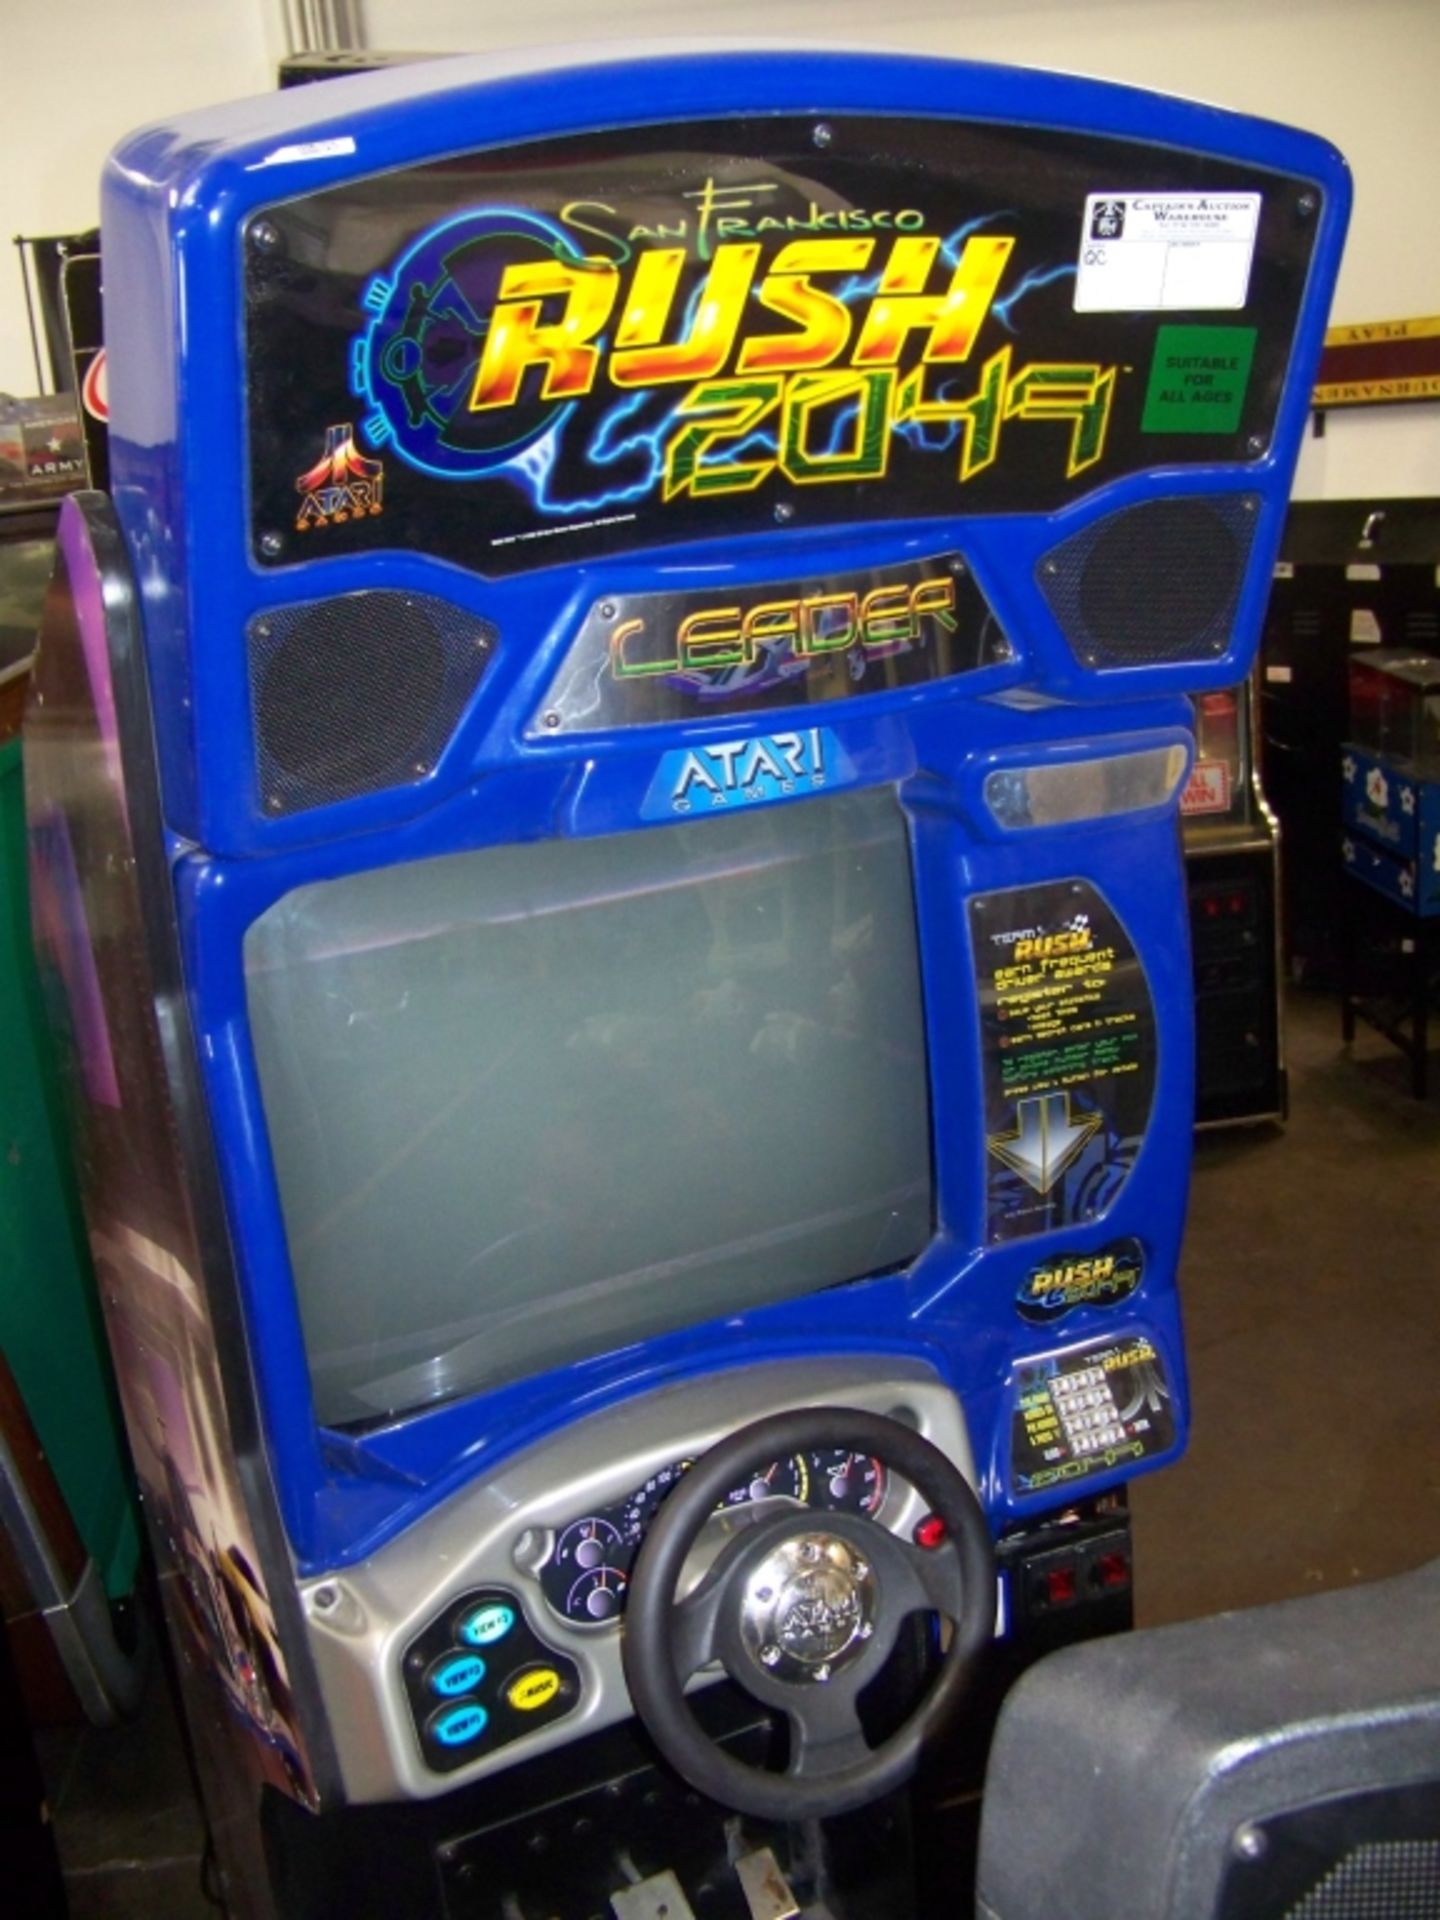 RUSH 2049 SITDOWN DRIVER ARCADE GAME - Image 2 of 3